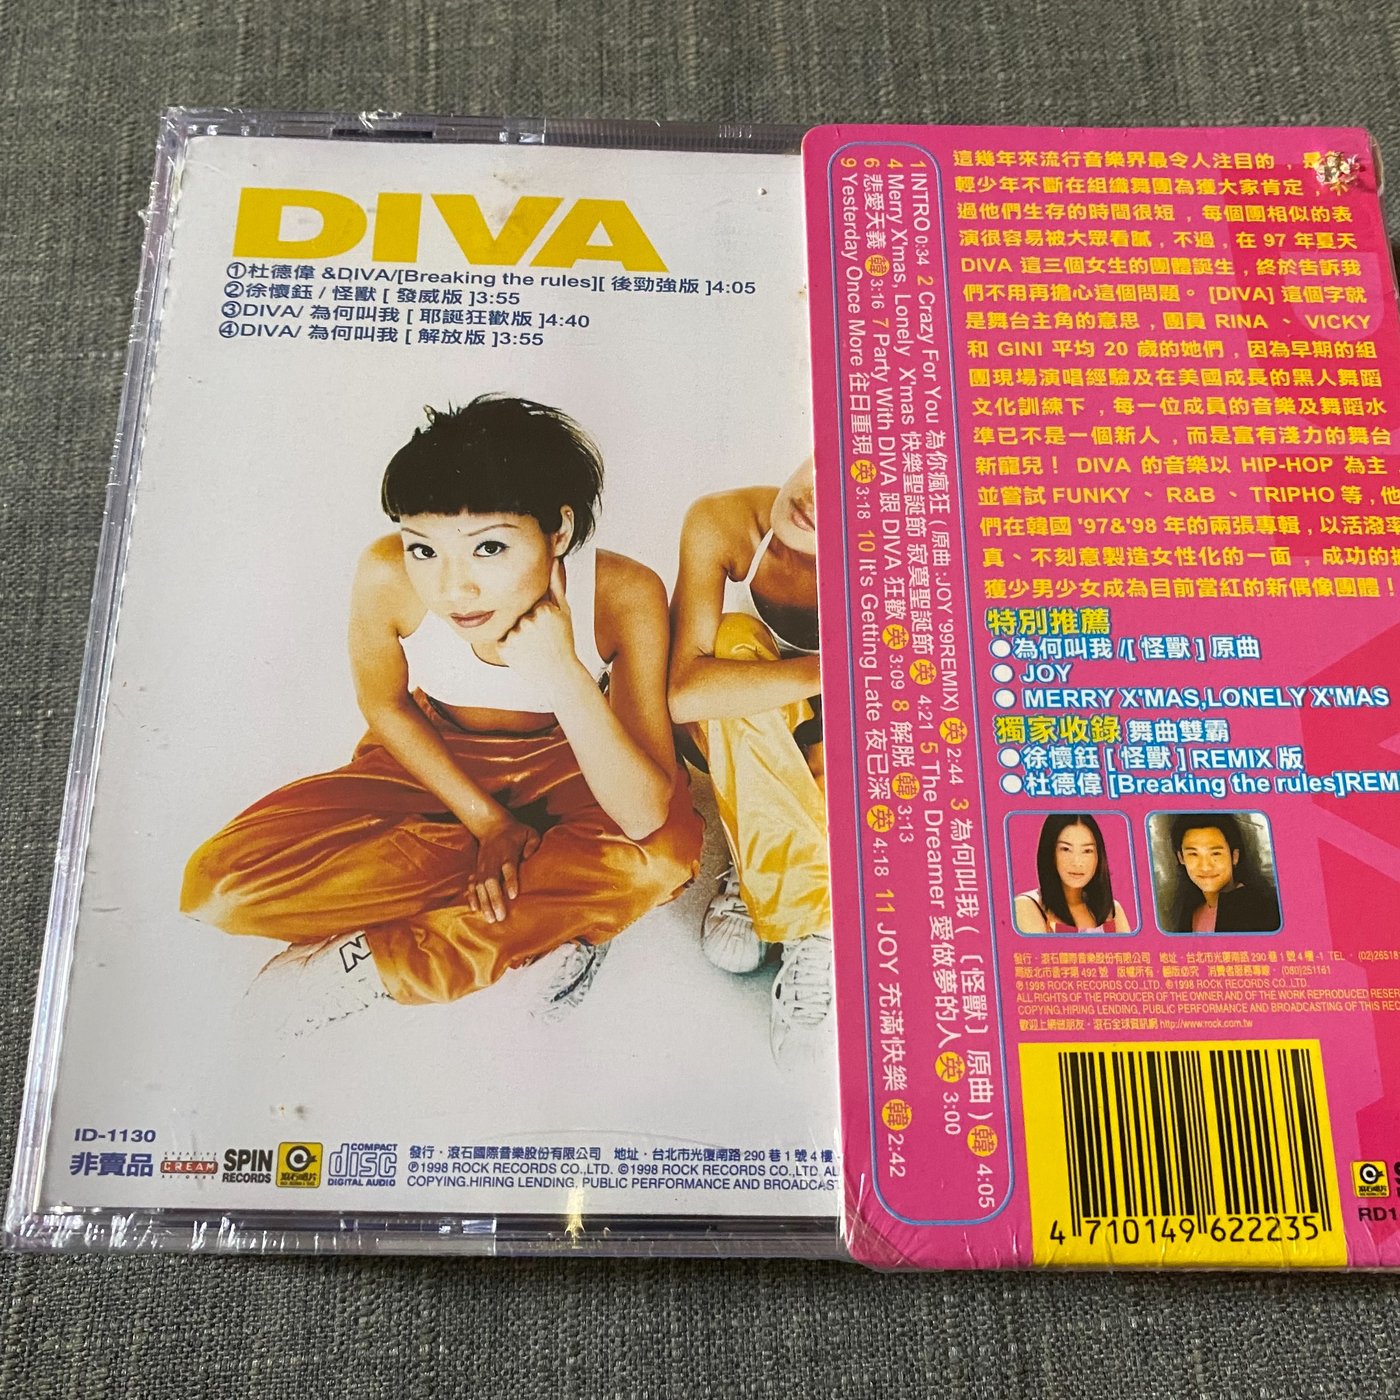 DIVA 首張同名專輯(全新/未拆封/已絕版) 超經典絕版雙CD值得收藏特價:3000元僅有一張售完為止| Yahoo奇摩拍賣